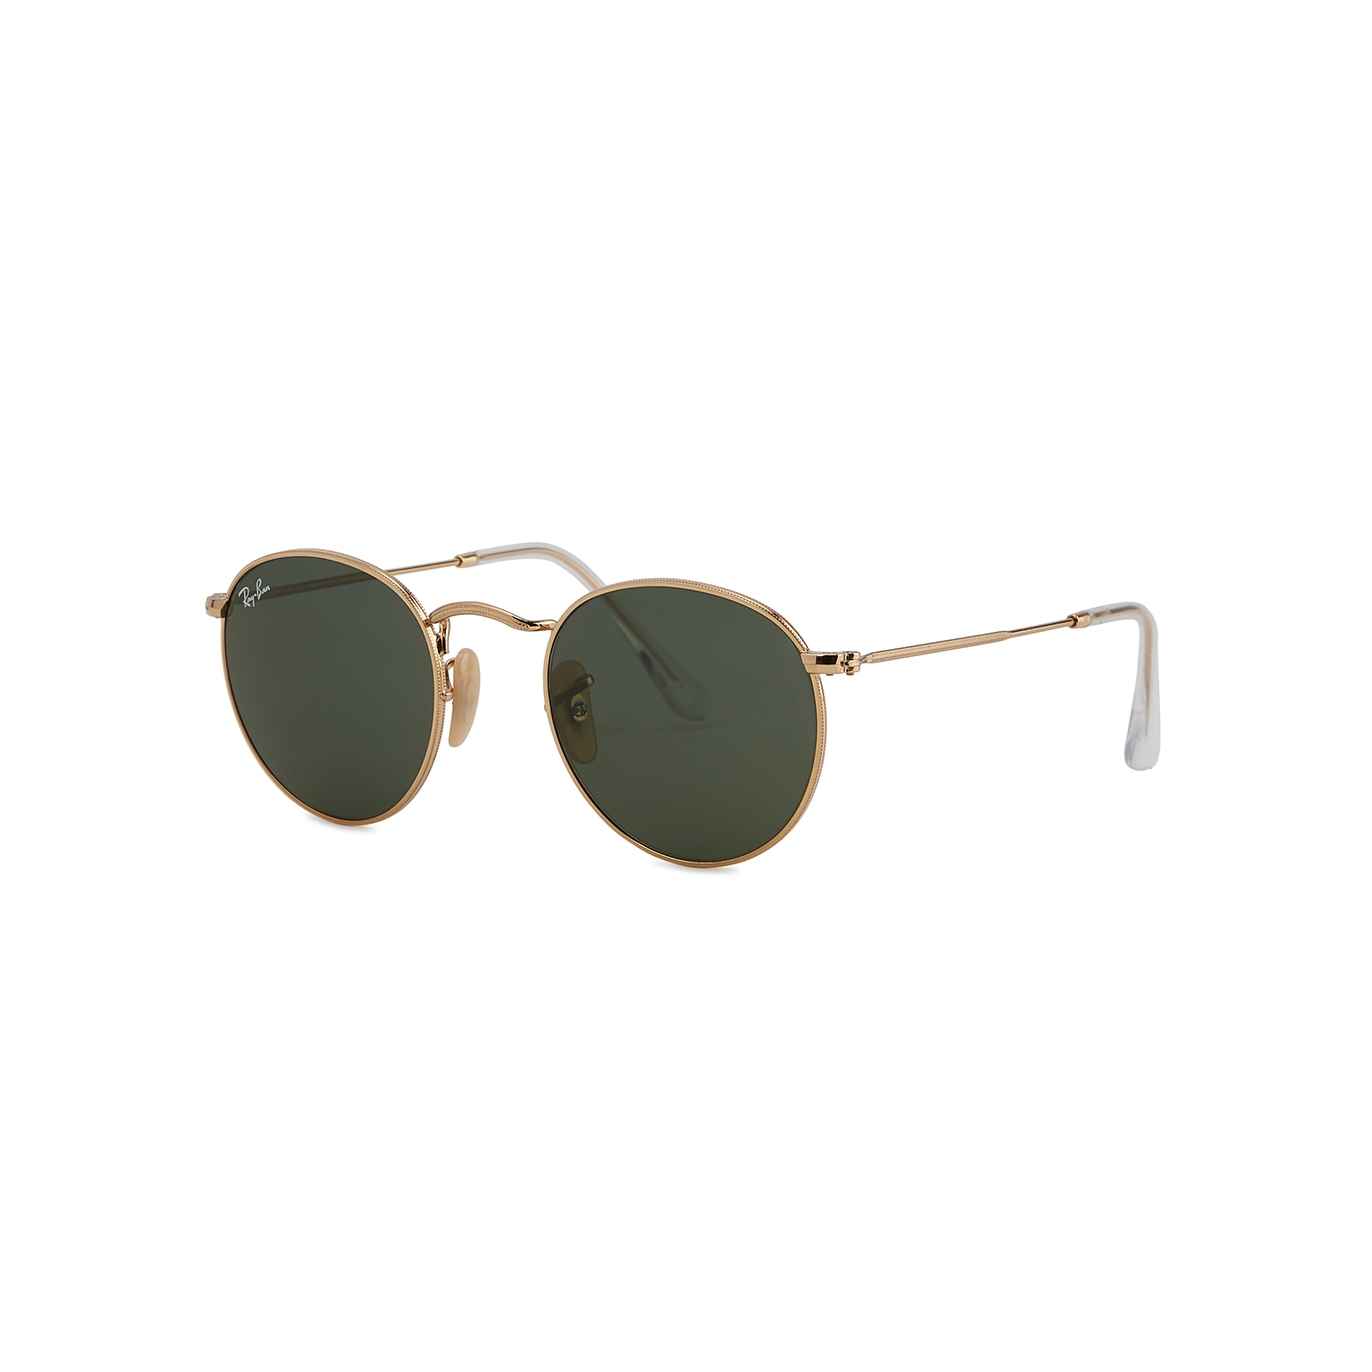 Ray-Ban Gold-tone Round-frame Sunglasses, Sunglasses, Green Lenses